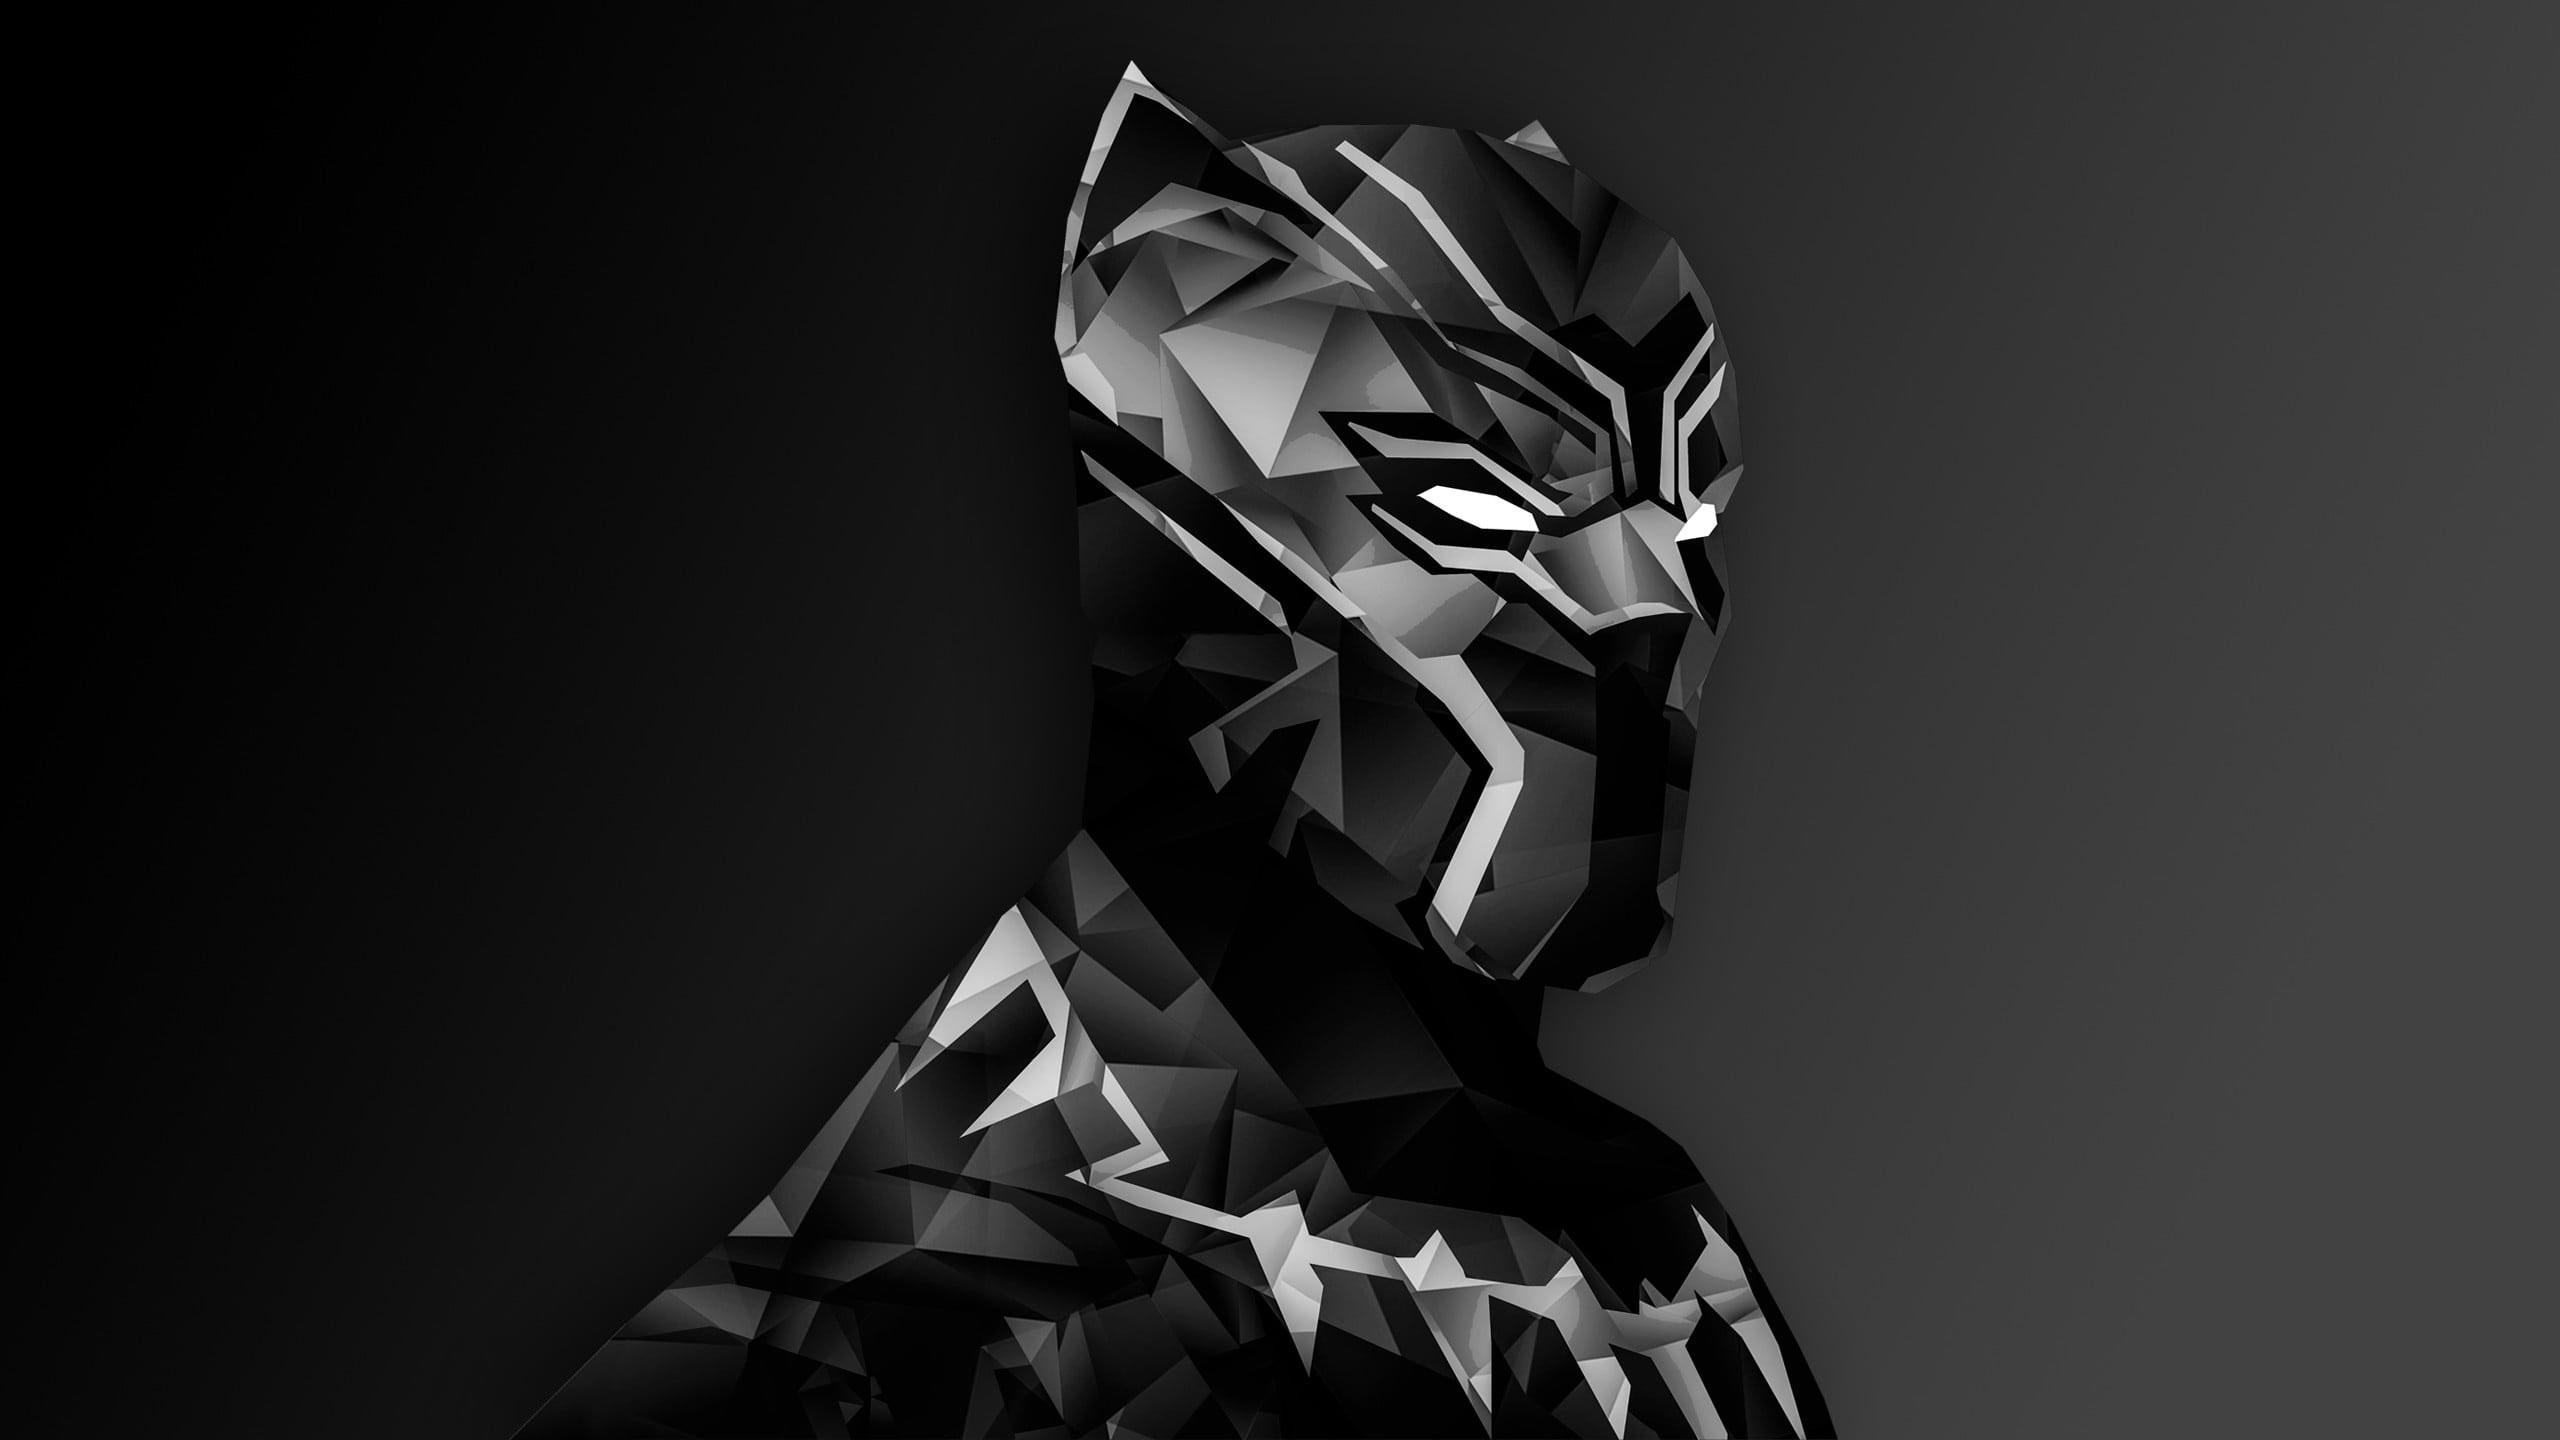 Marvel Black Panther digital wallpaper, Captain America: Civil War